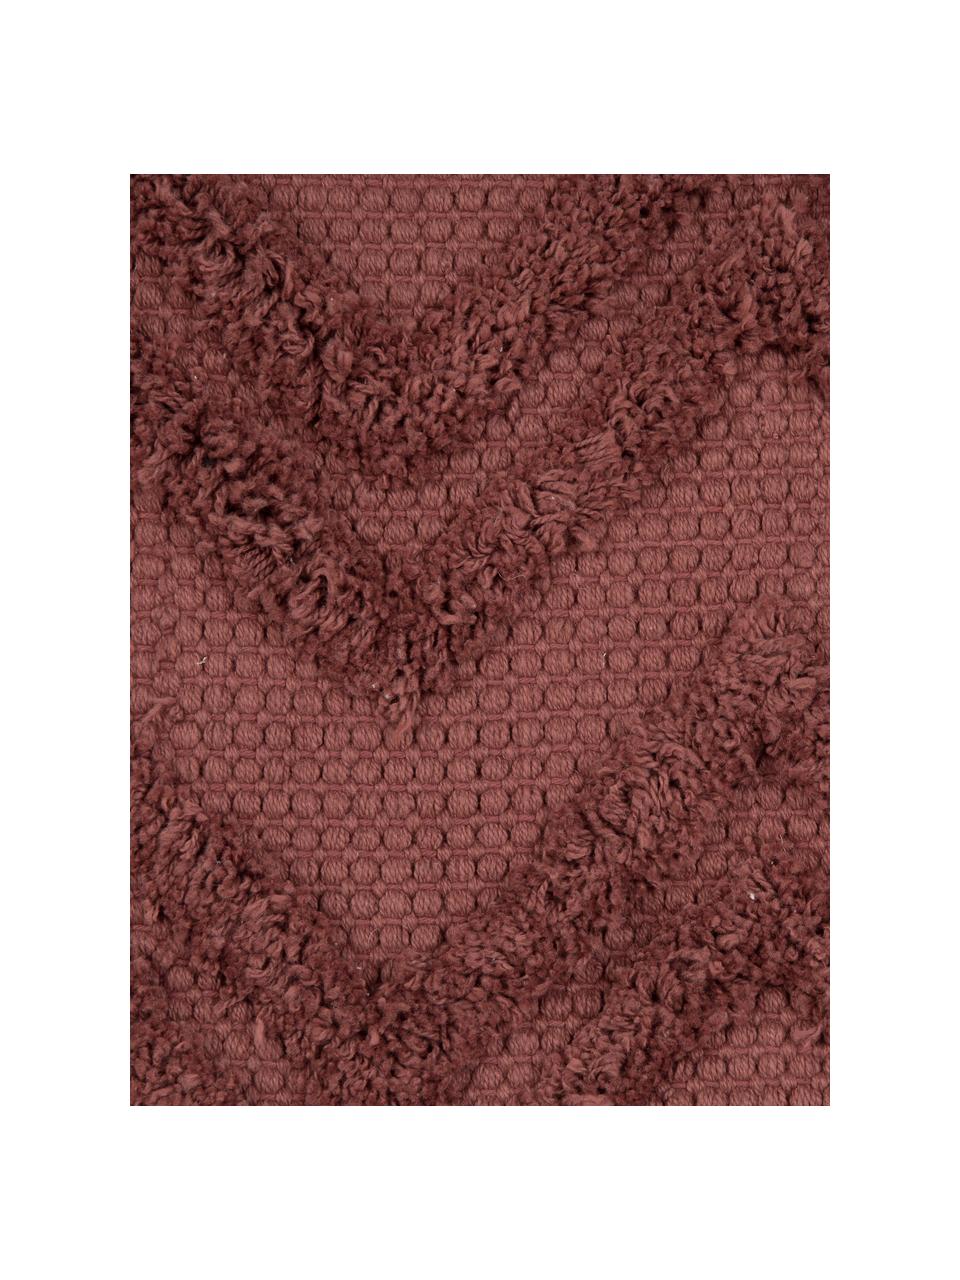 Boho Kissenhülle Akesha mit getuftetem Zickzack-Muster, 100% Baumwolle, Rostrot, B 45 x L 45 cm